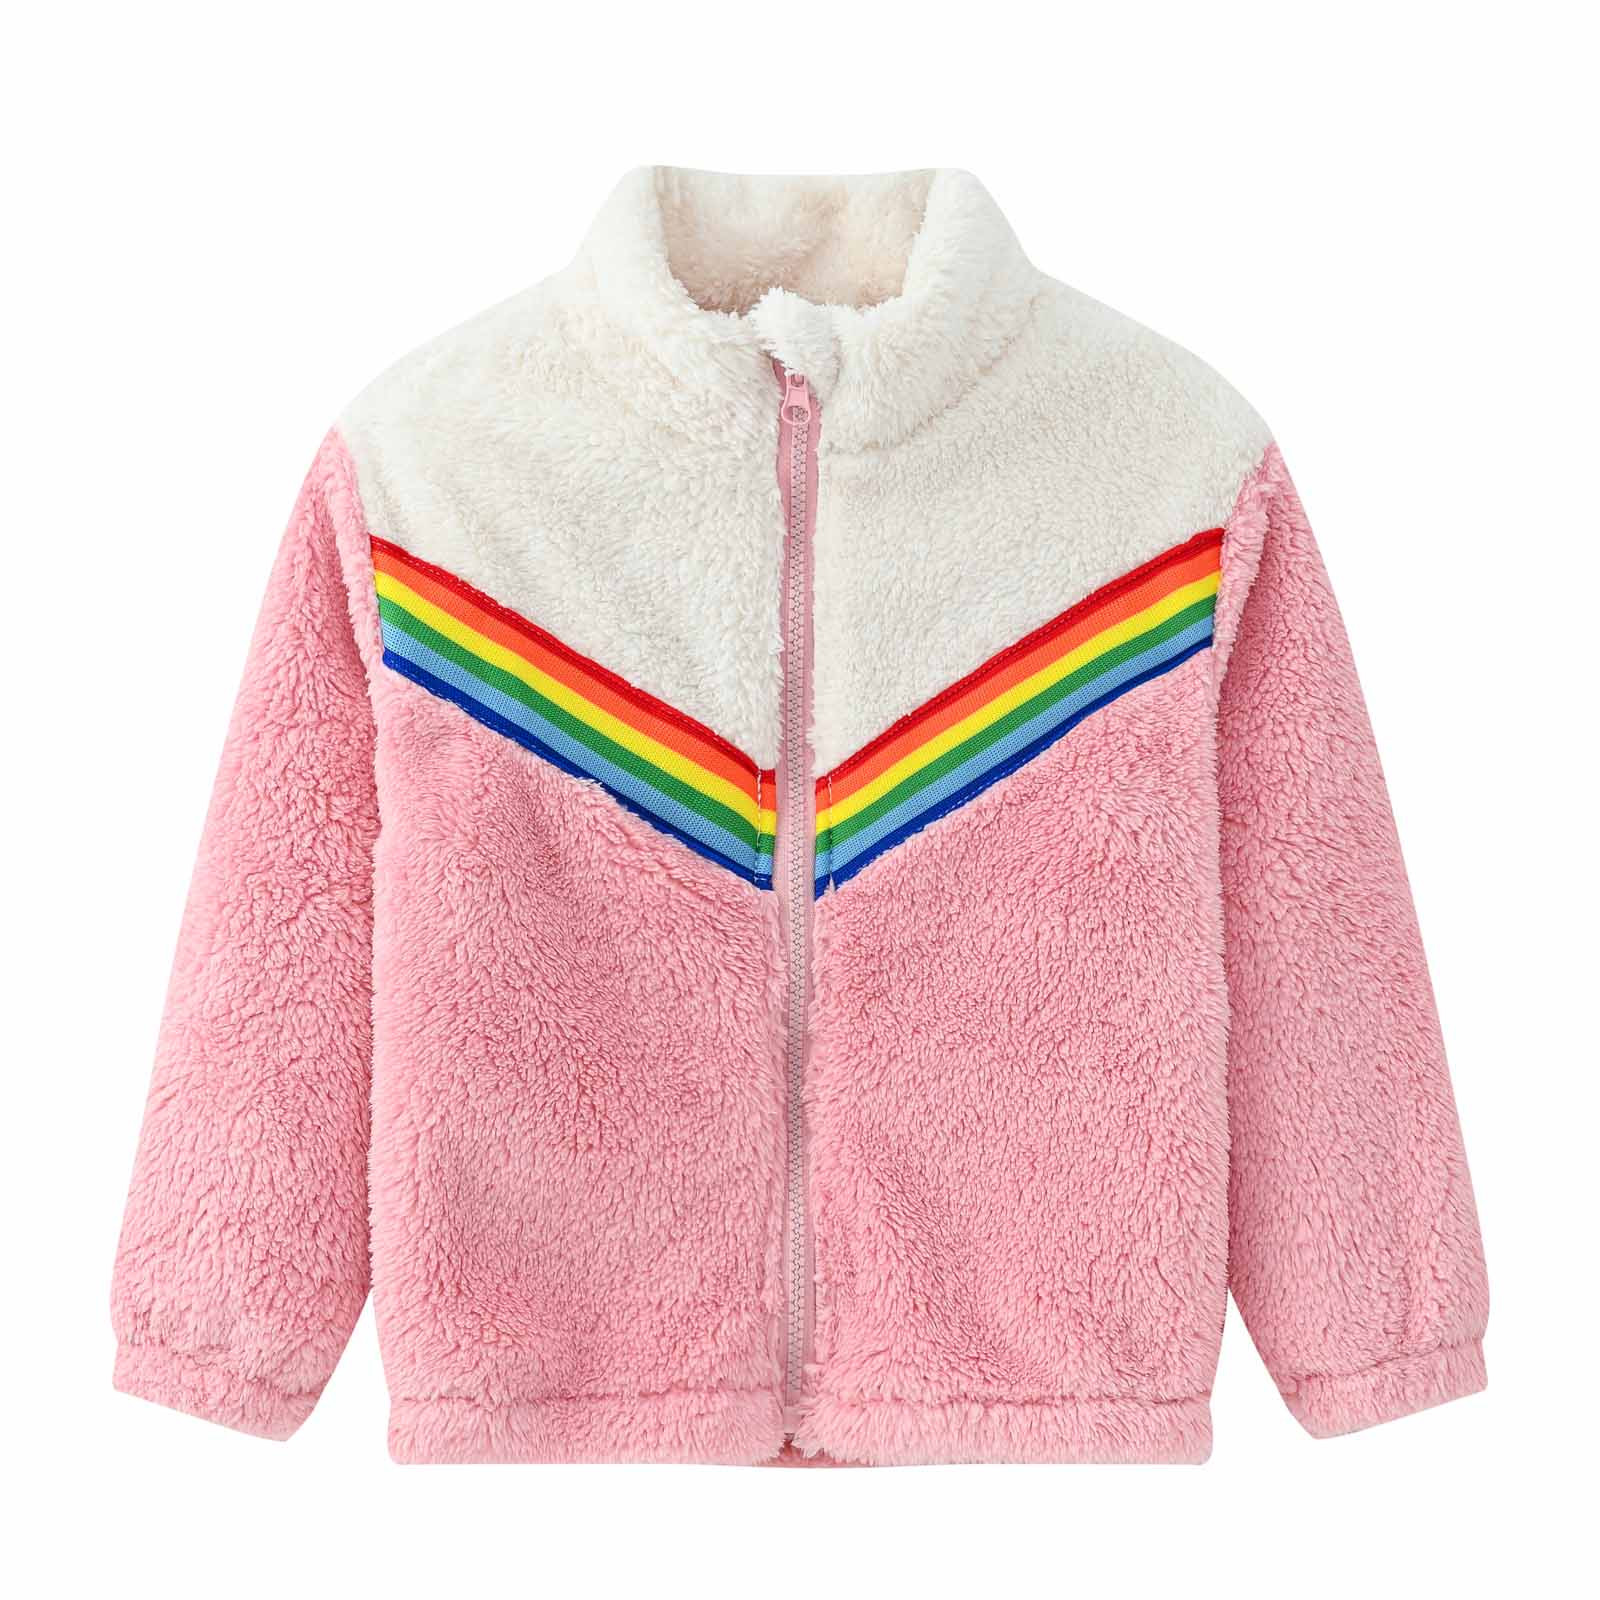 YYDGH Girls Zipper Jacket Fuzzy Sweatshirt Long Sleeve Casual Cozy Fleece Sherpa Outwear Coat Full-Zip Rainbow Jackets(Pink,4-5 Years) - image 1 of 8